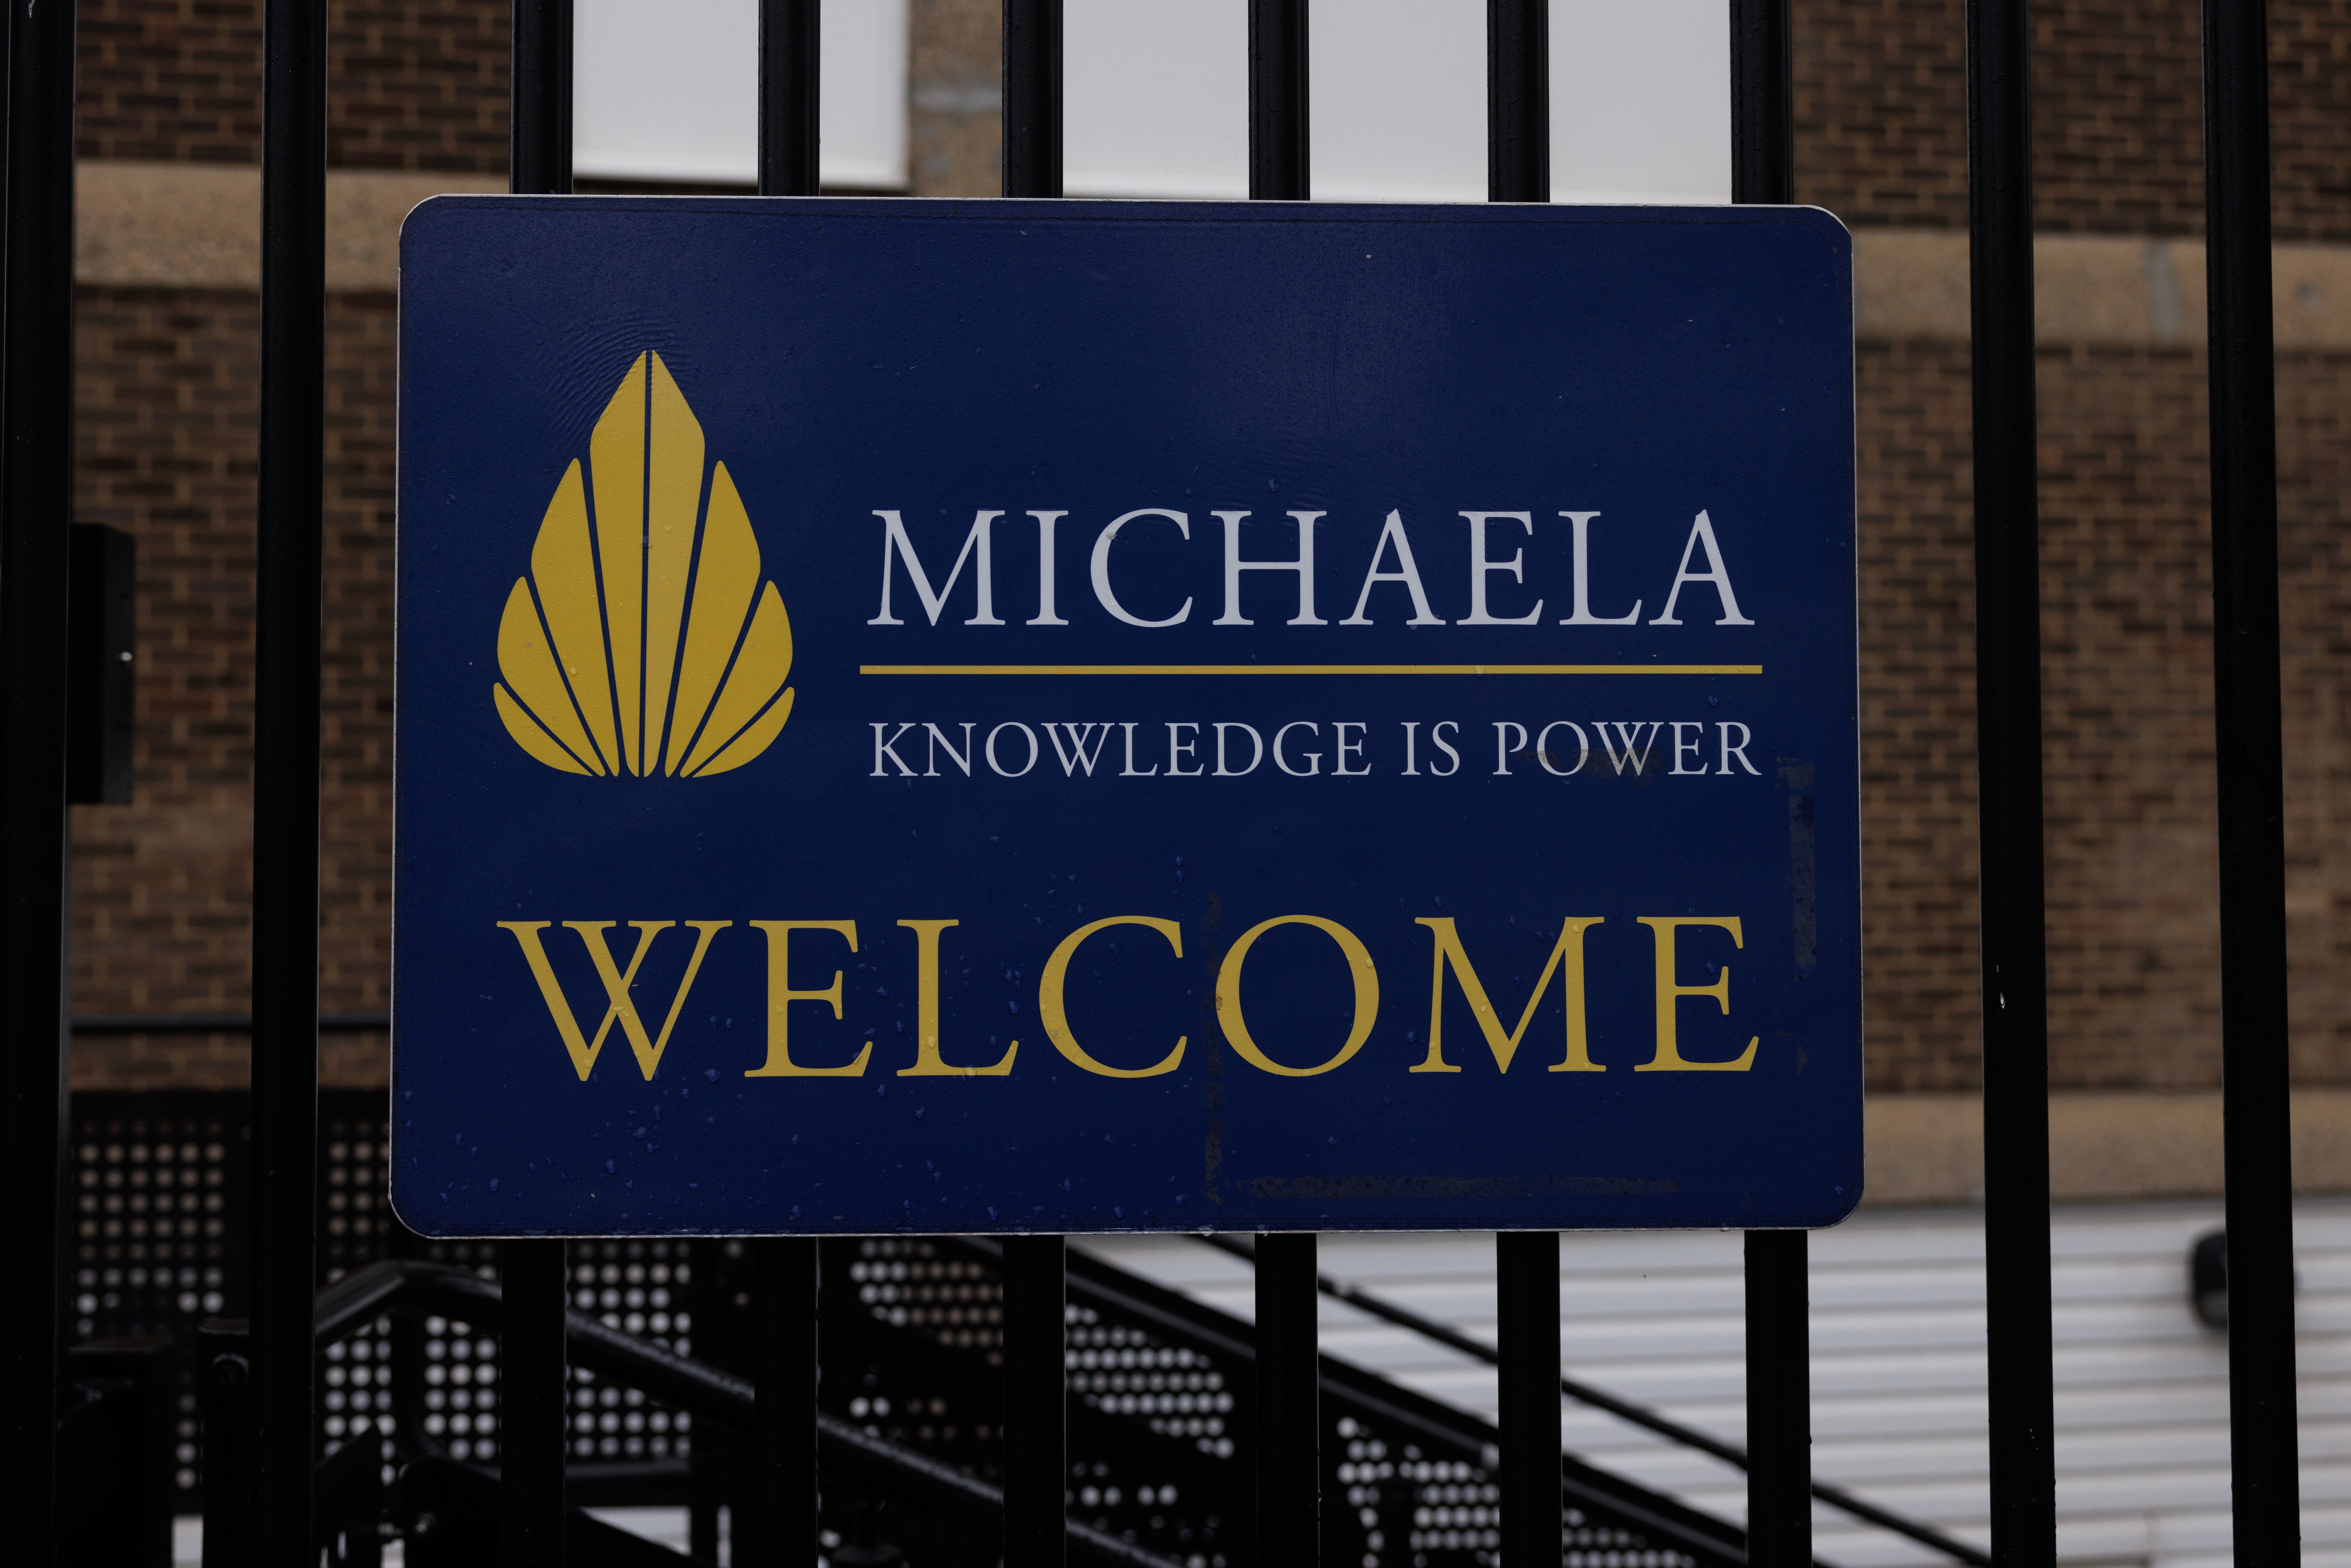 Michaela Community School has strict rules for its pupils